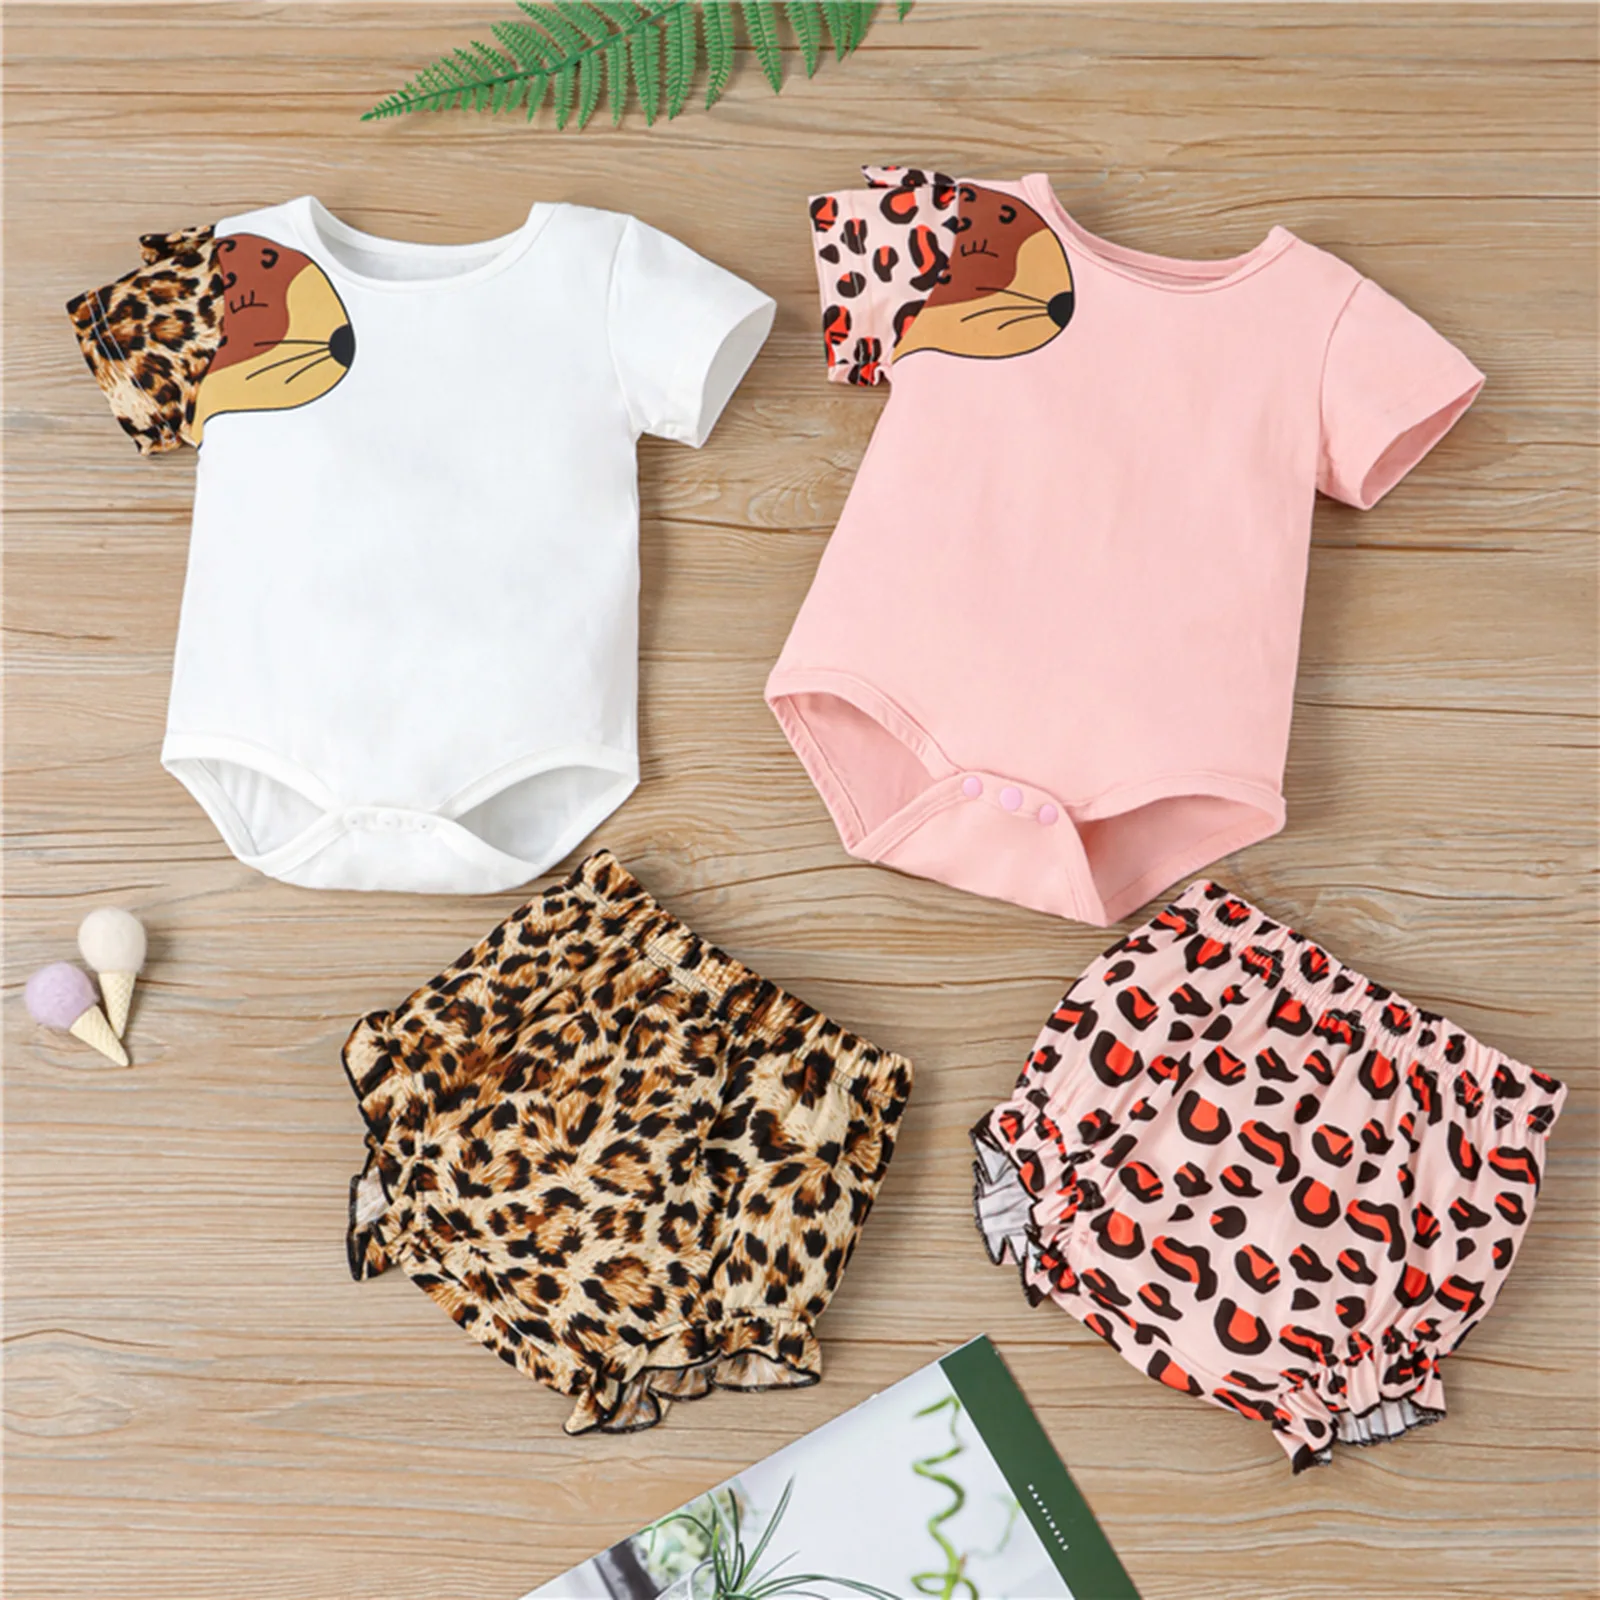 

Pudcoco 2 Pieces Kids Suit Set, Leopard Print Round Neck Short Sleeve Romper+ Short Pants for Summer, White/Pink, 0-24 Months